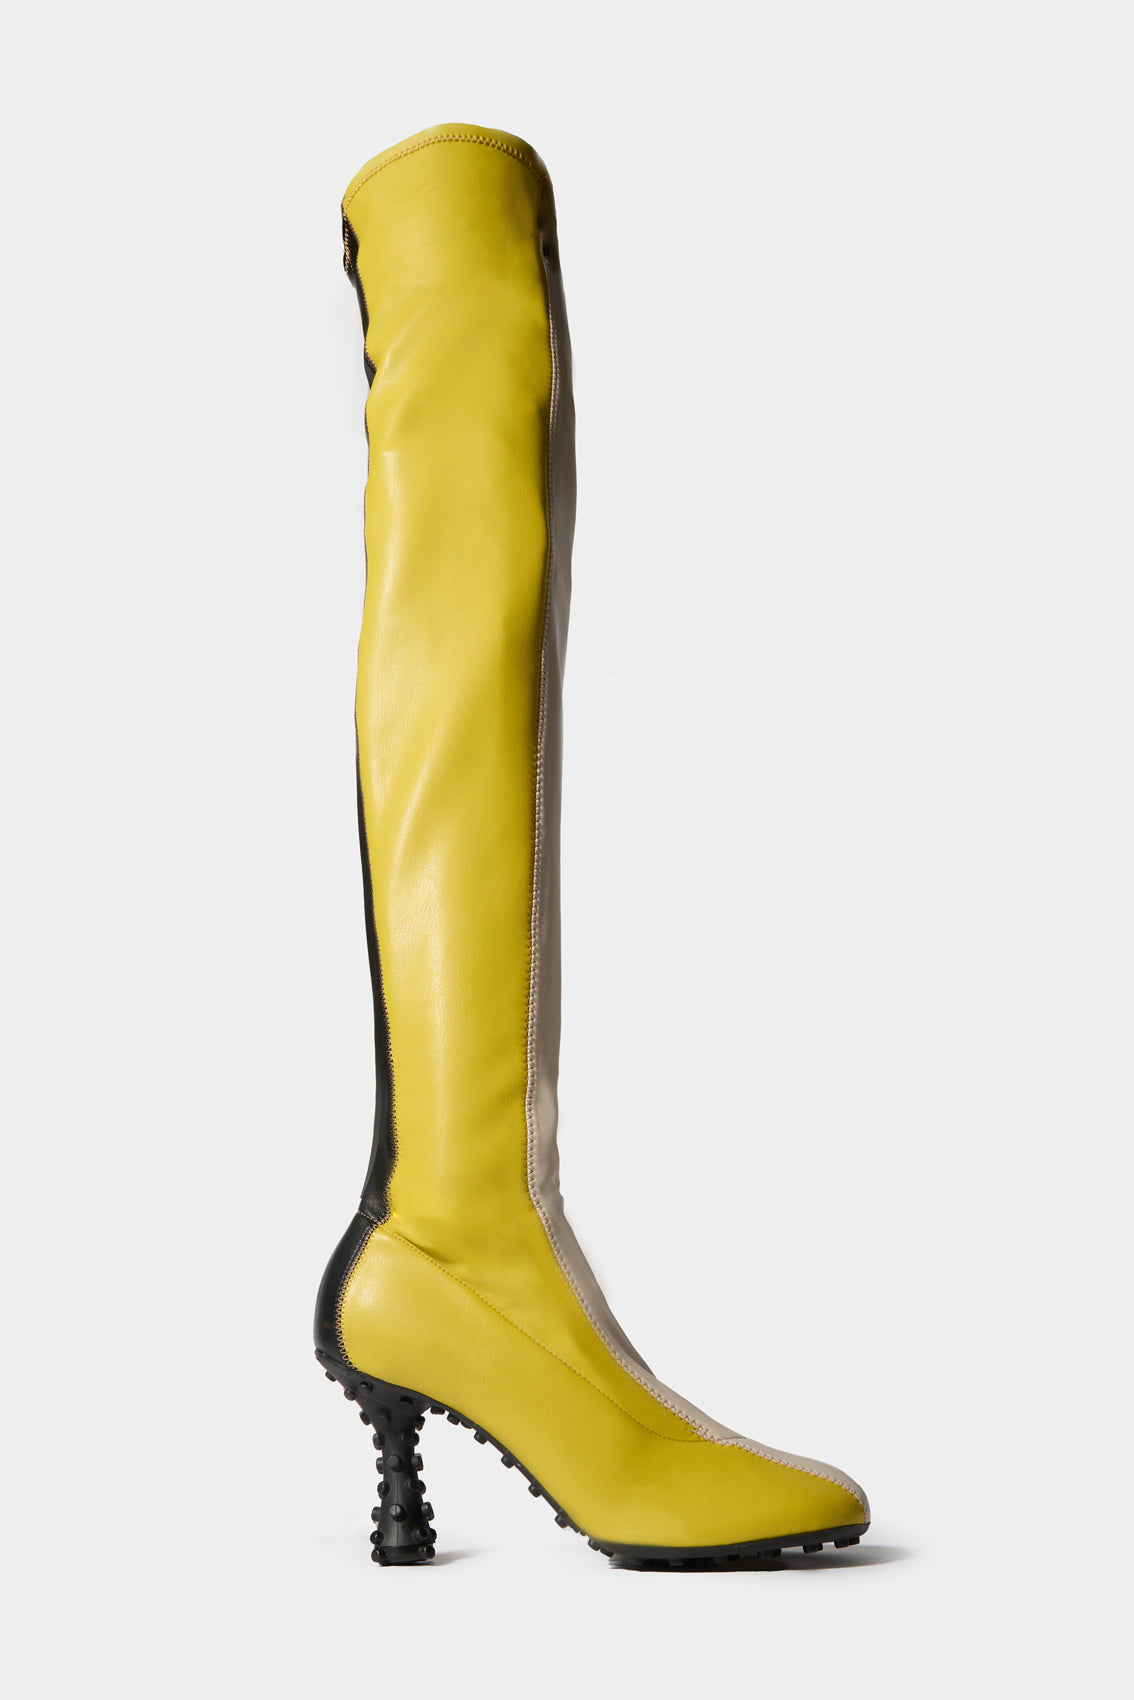 1000CHIODI HIGH BOOTS / yellow